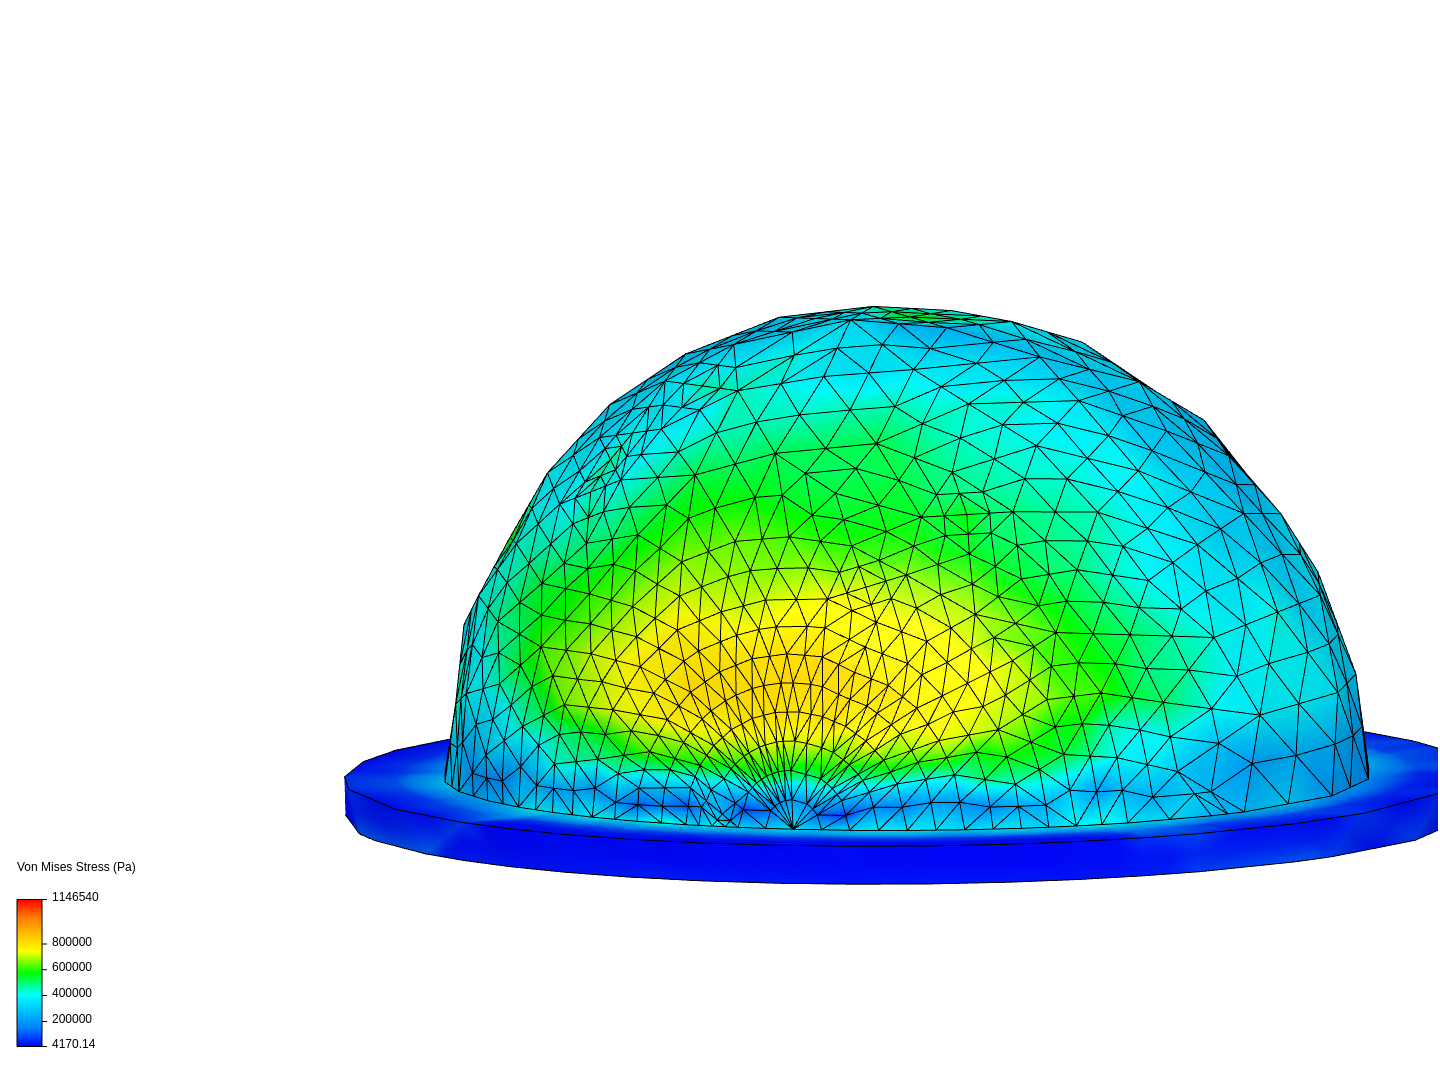 Thin Shell Simulation image